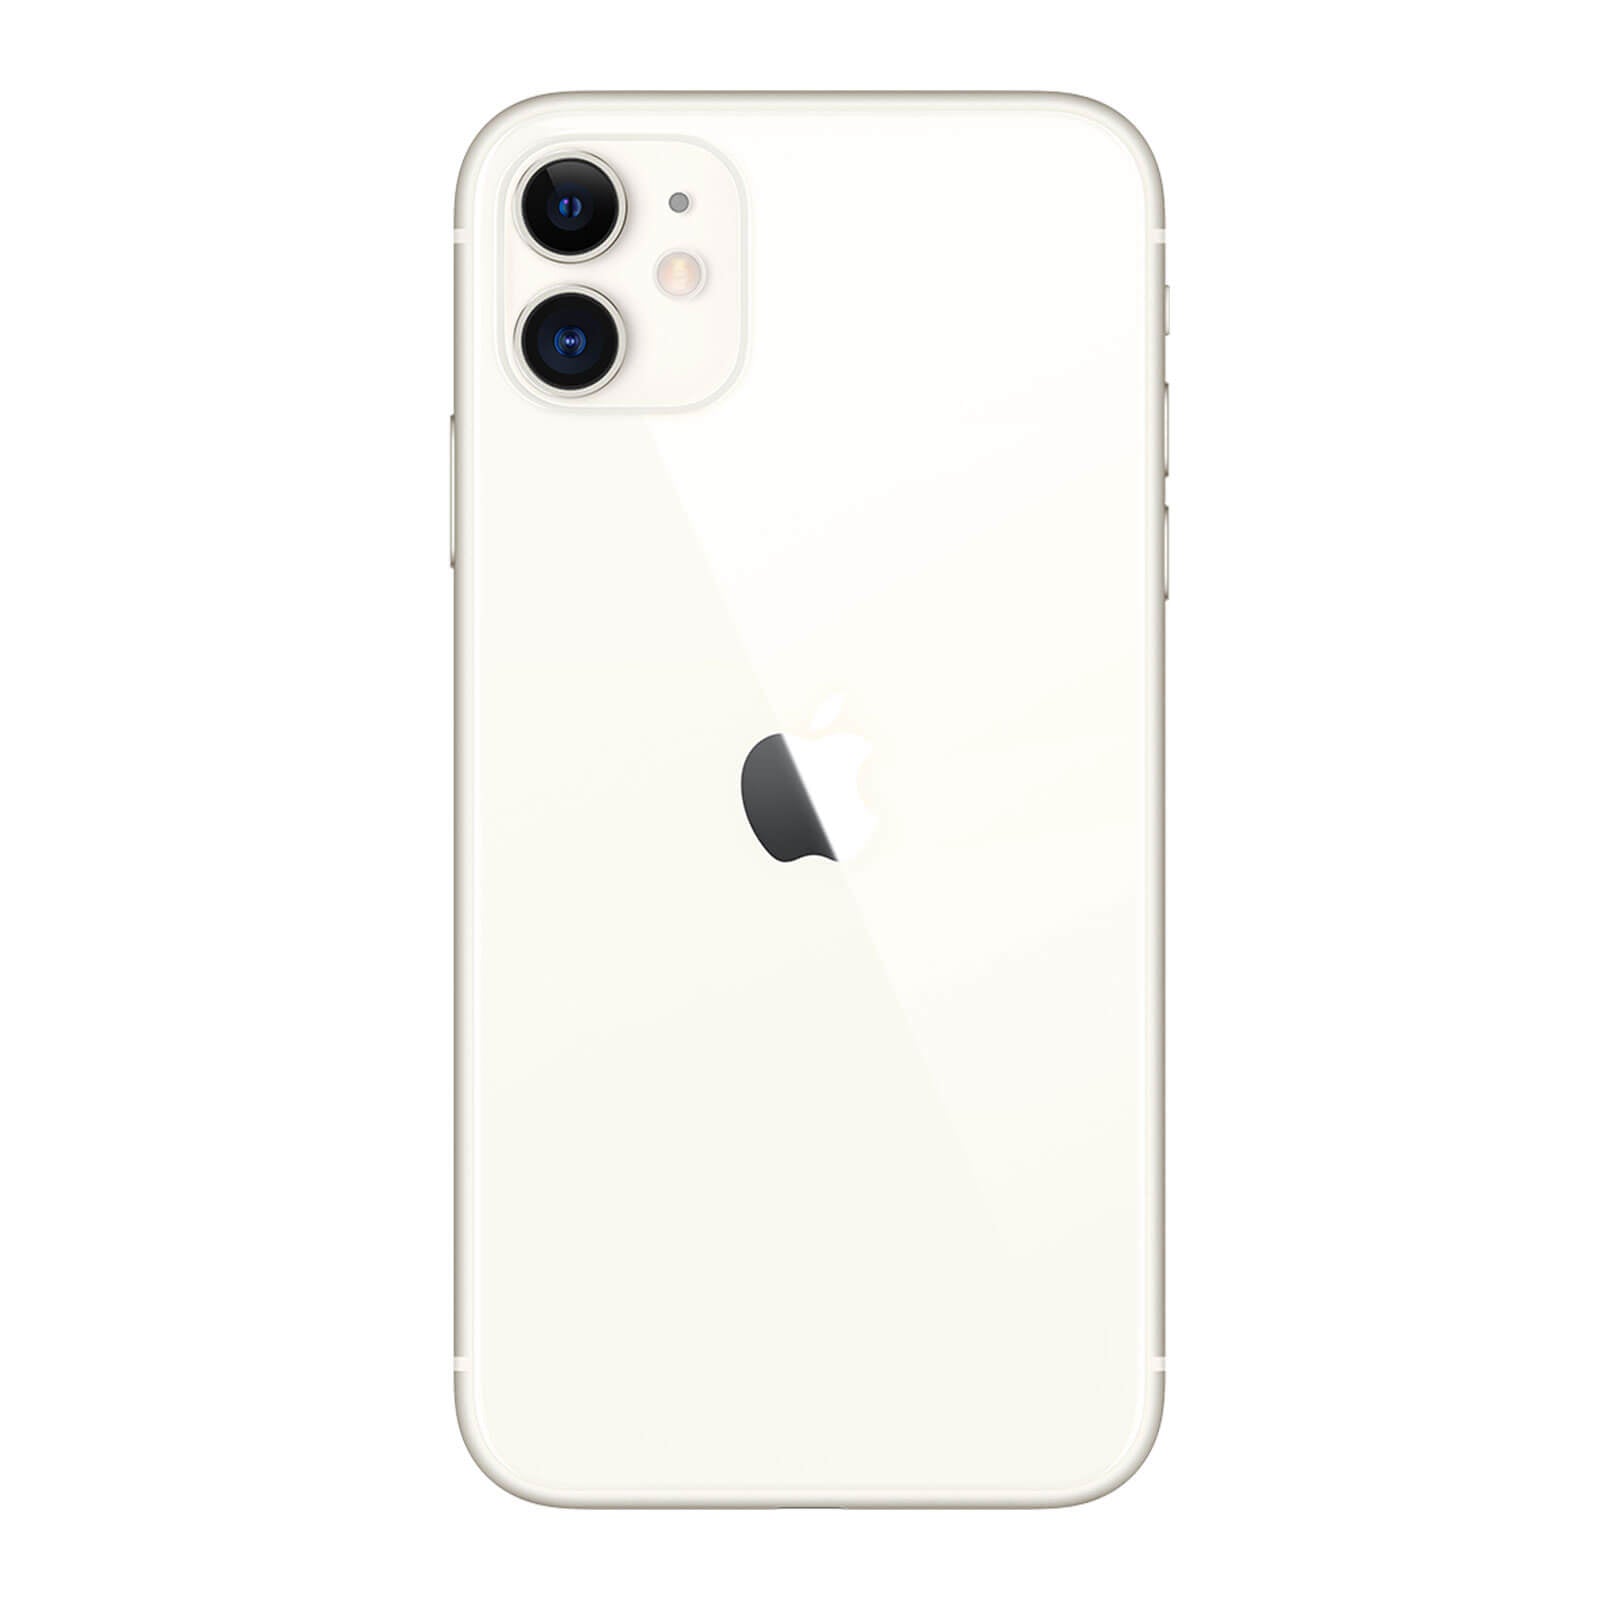 Apple iPhone 11 128GB White Pristine - Sprint